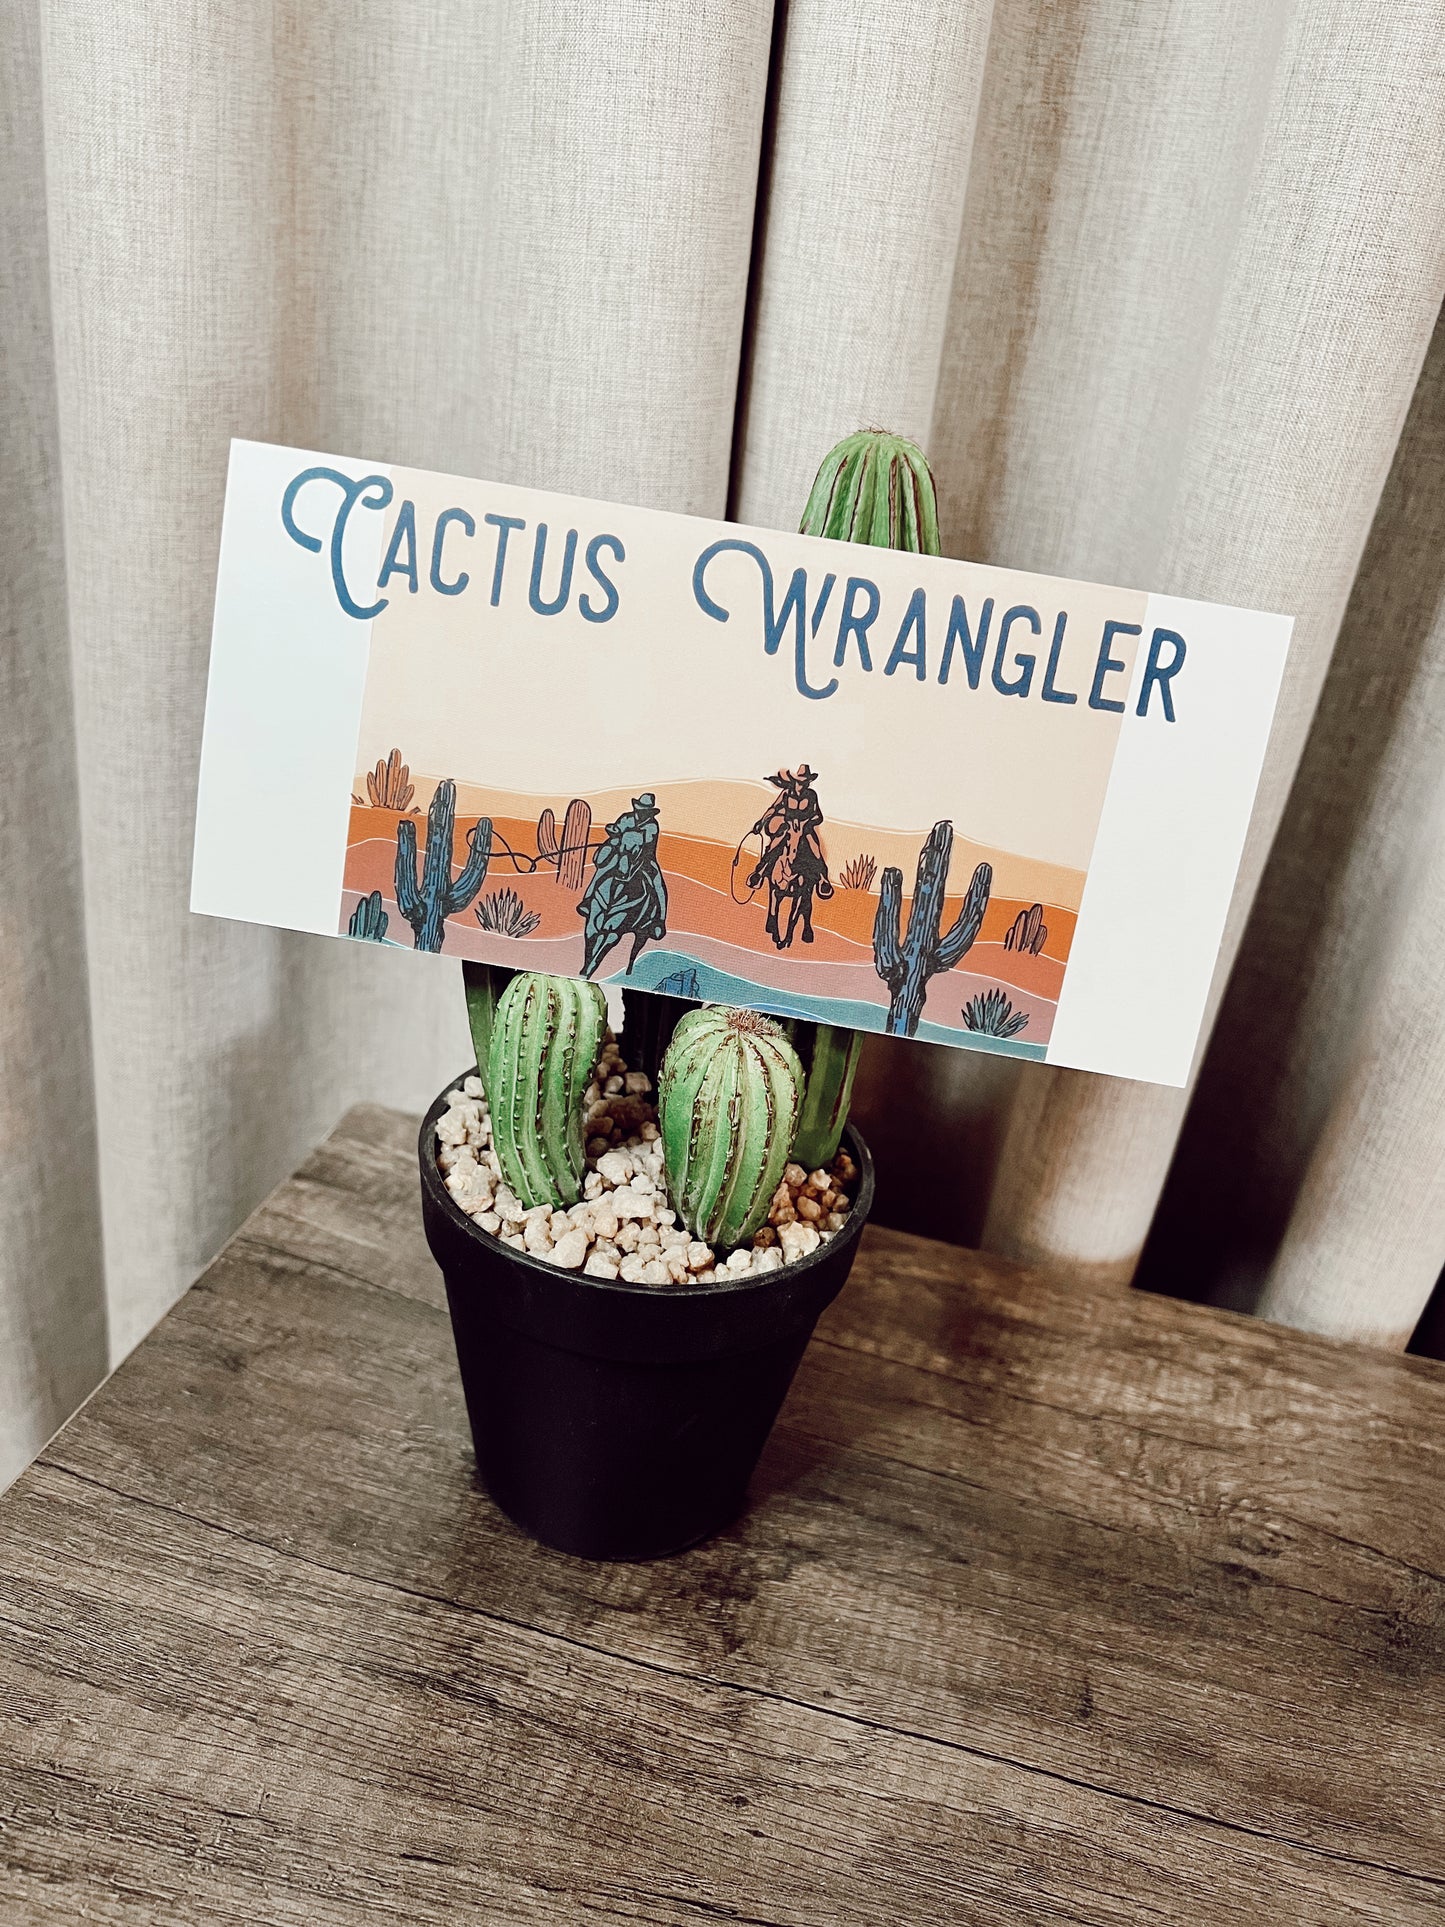 Cactus Wrangler gift certificate